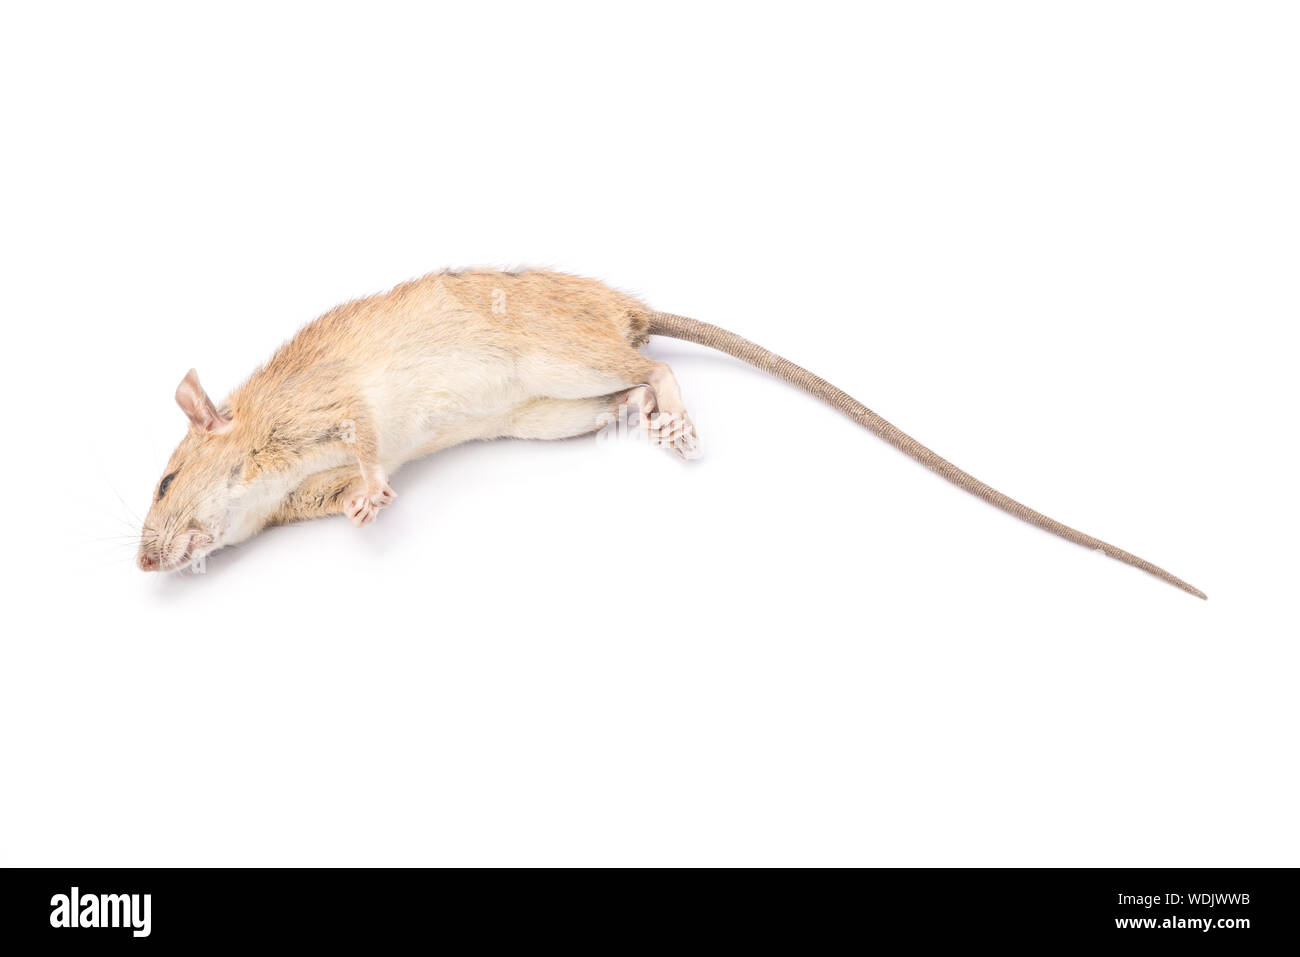 Rata muerta Imágenes recortadas de stock - Alamy